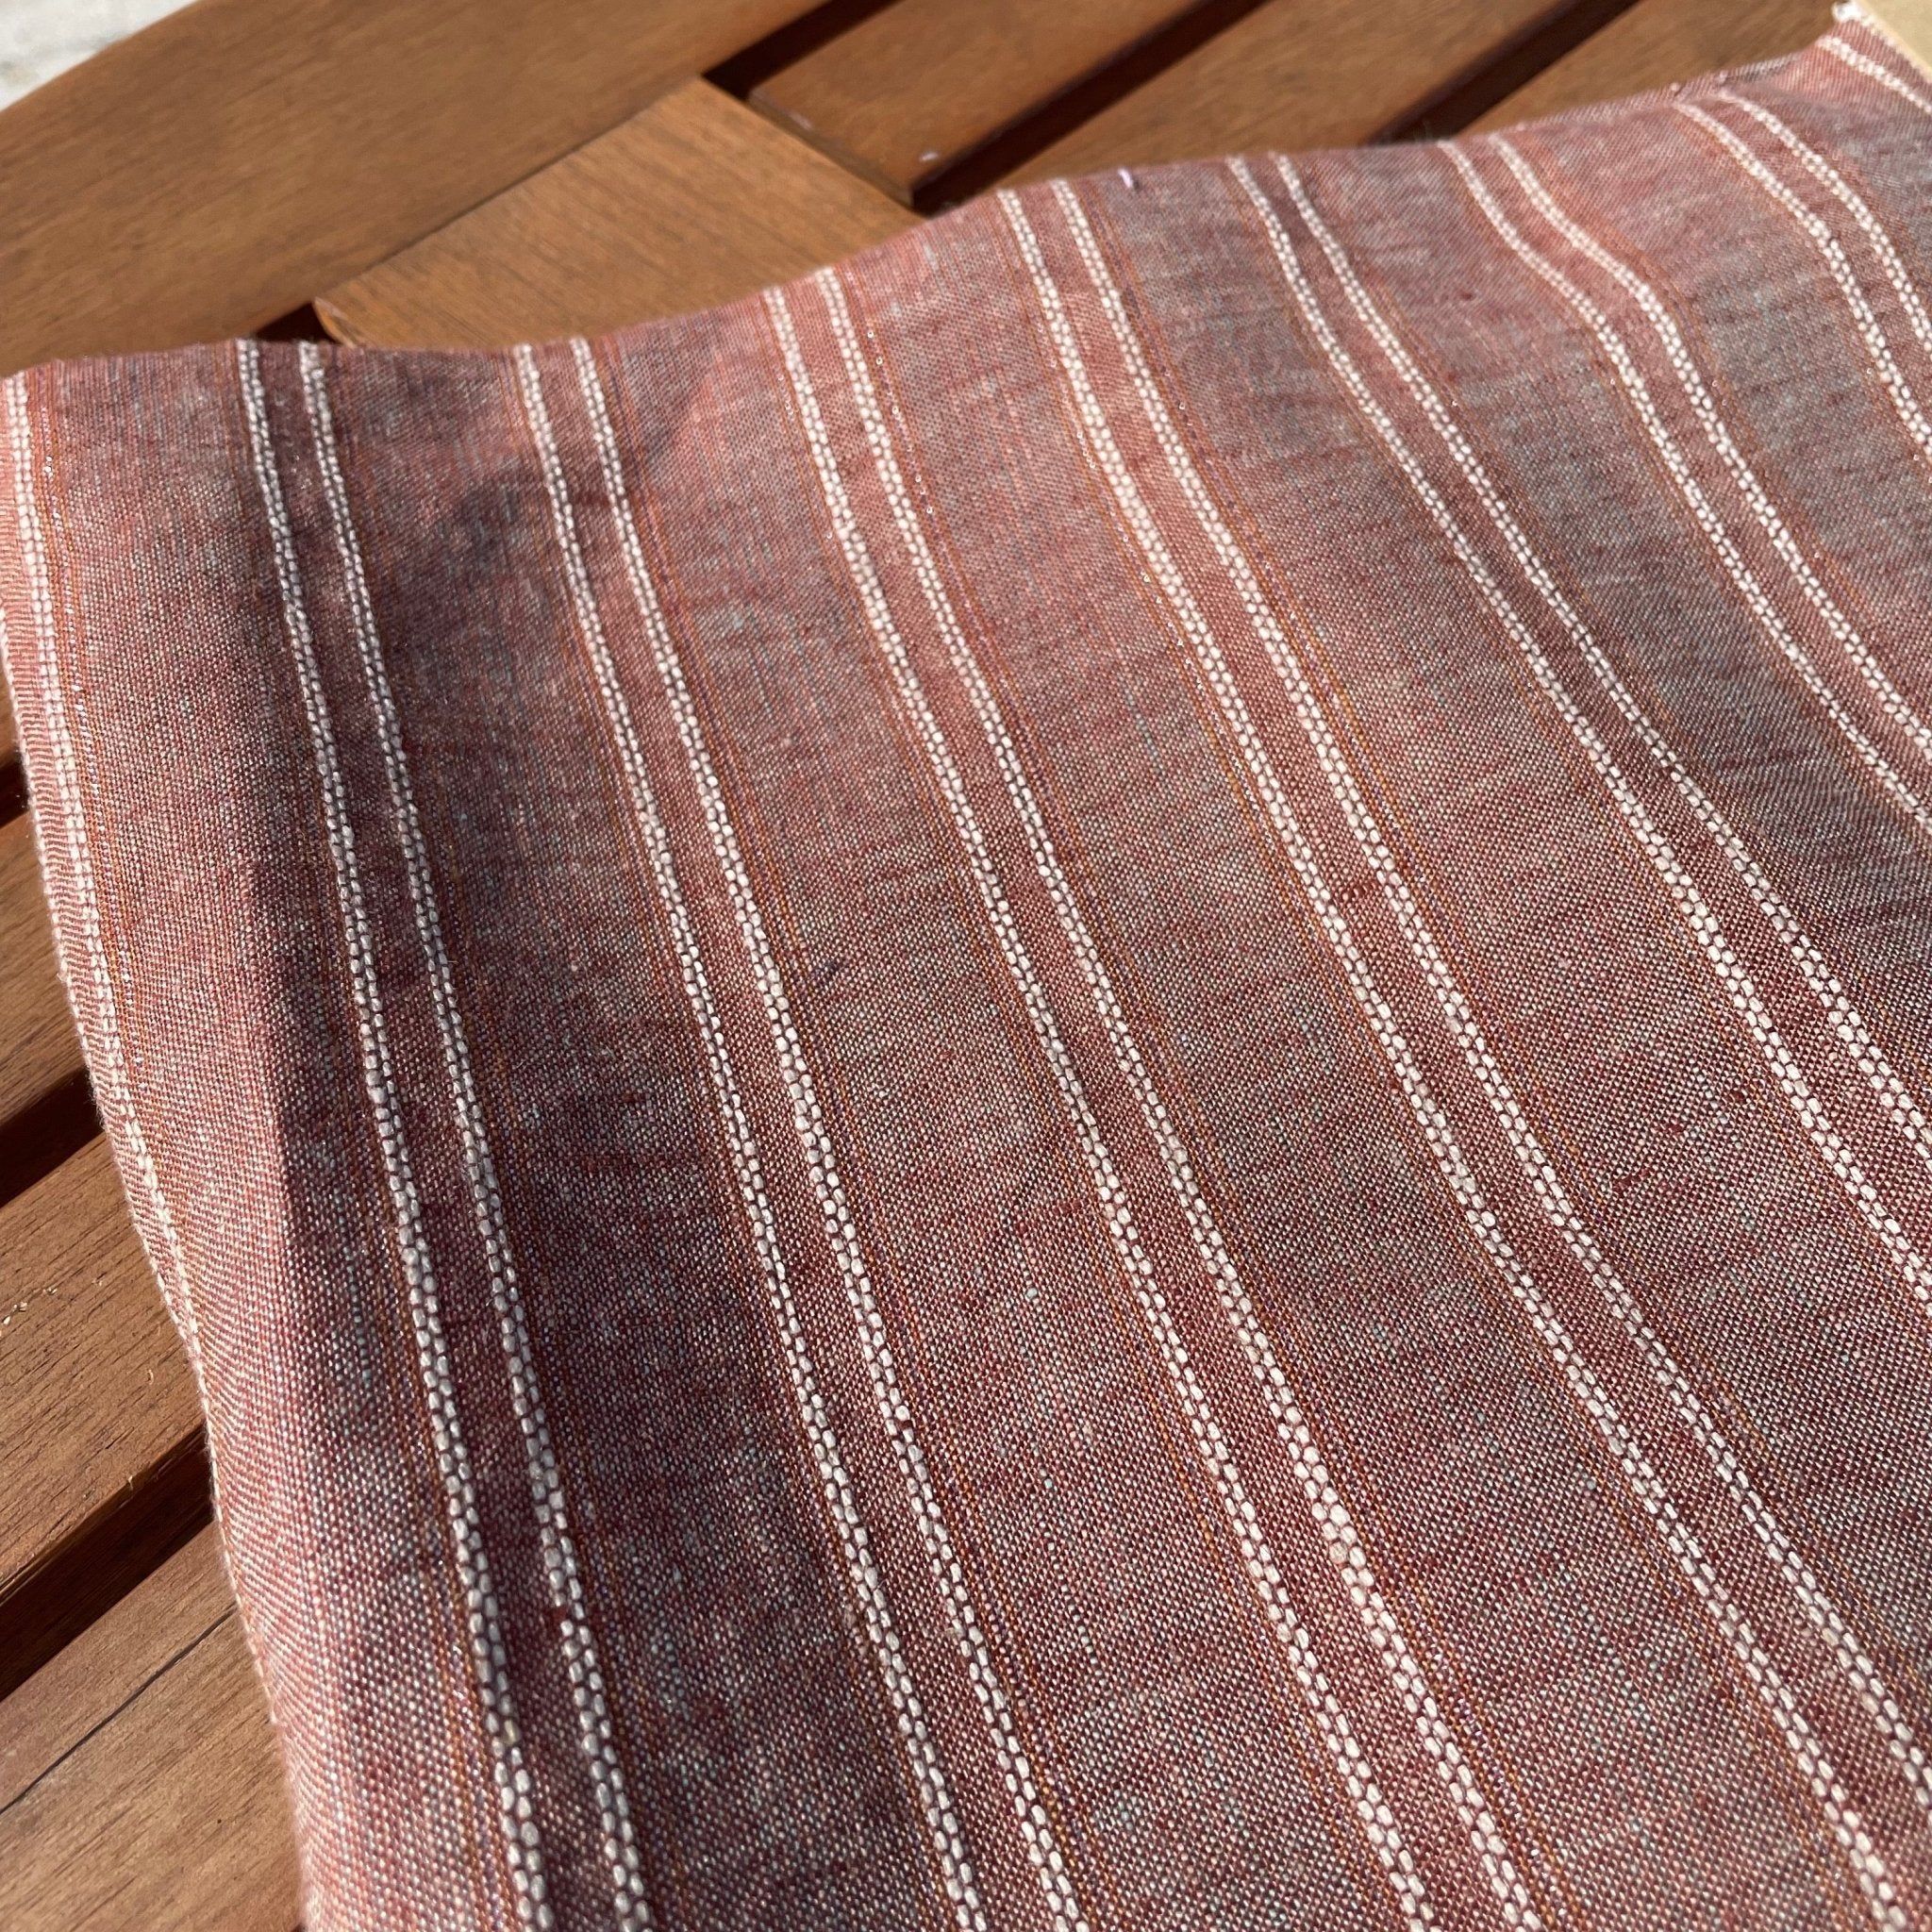 Lurex Linen Stripe Fabric (3127) - The Linen Lab - brown